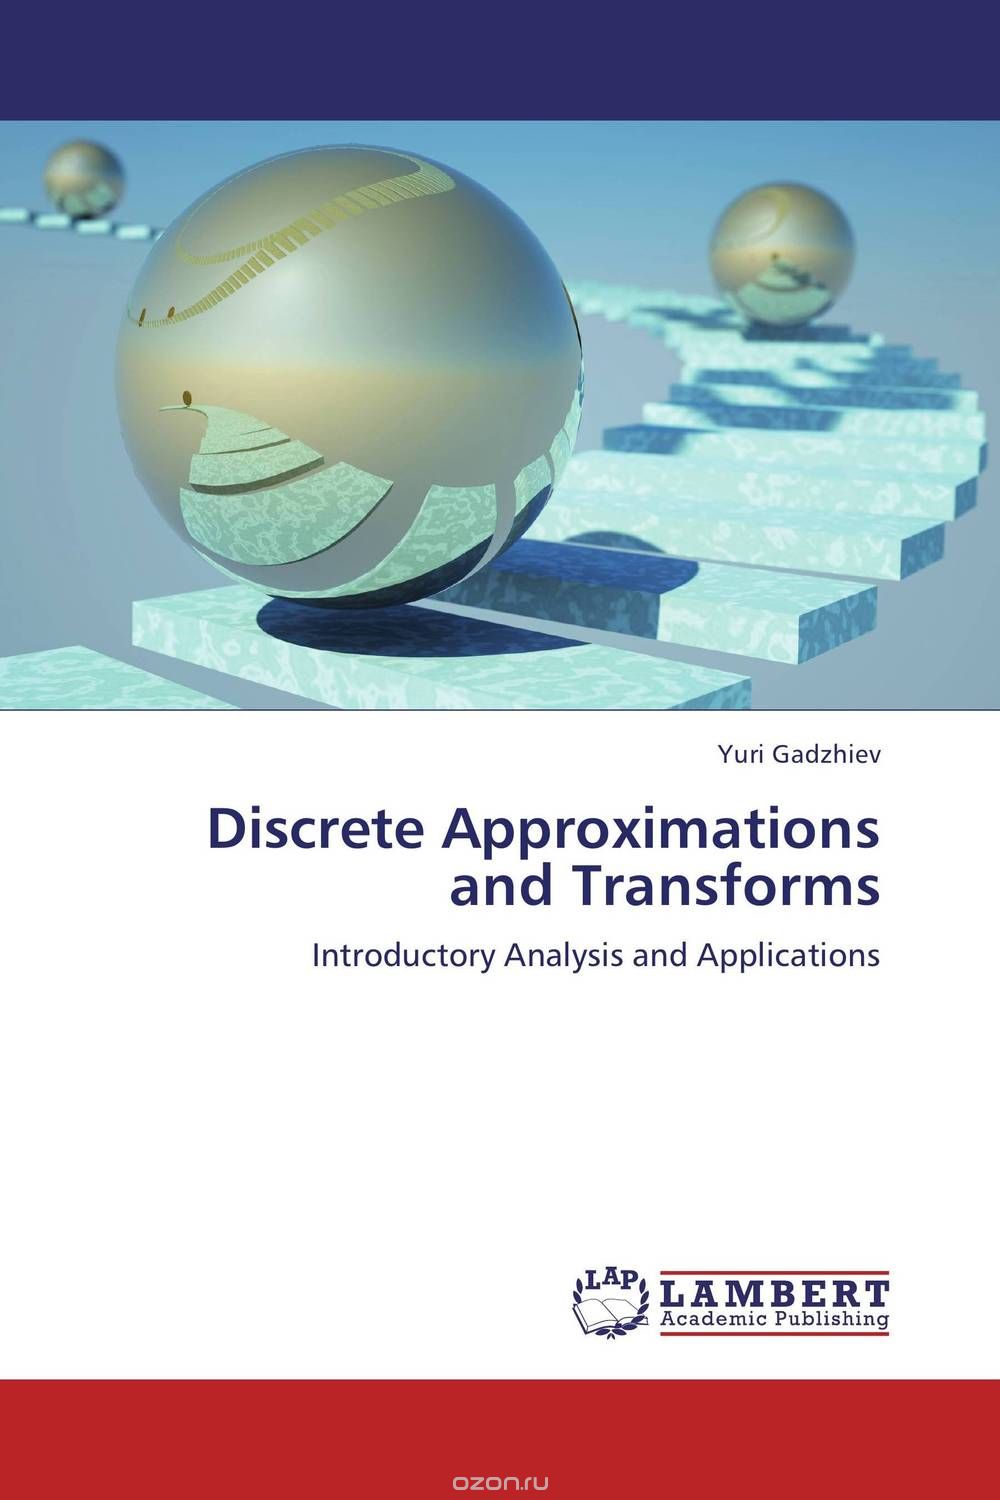 Скачать книгу "Discrete Approximations and Transforms"